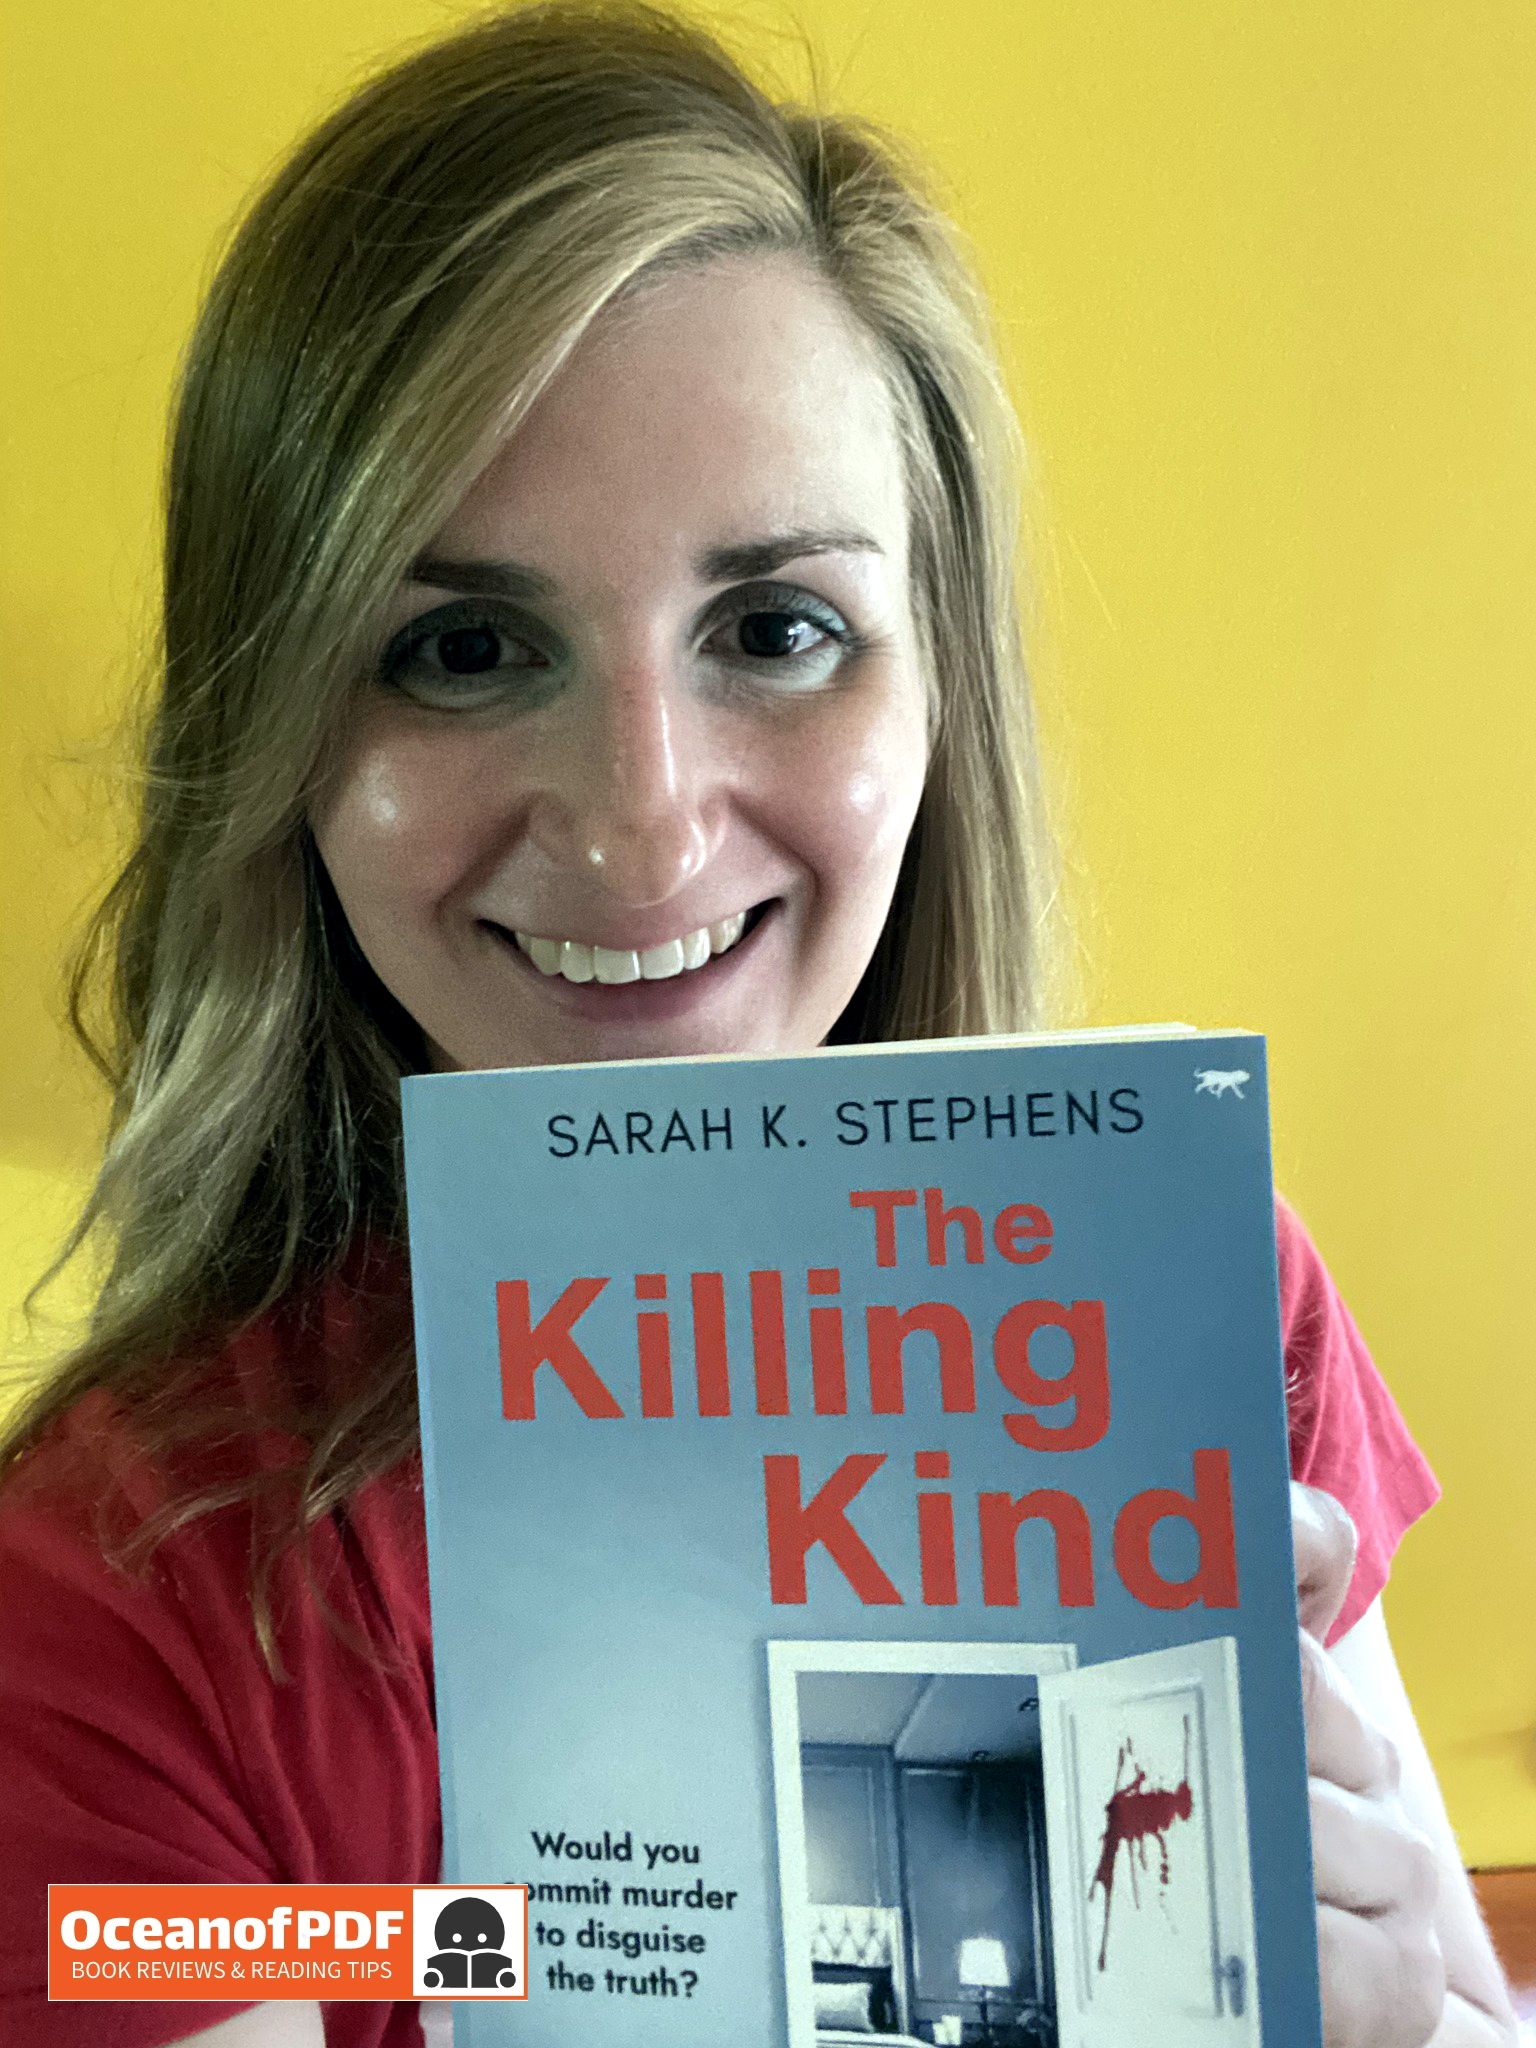 The Killing Kind by Sarah K. Stephens